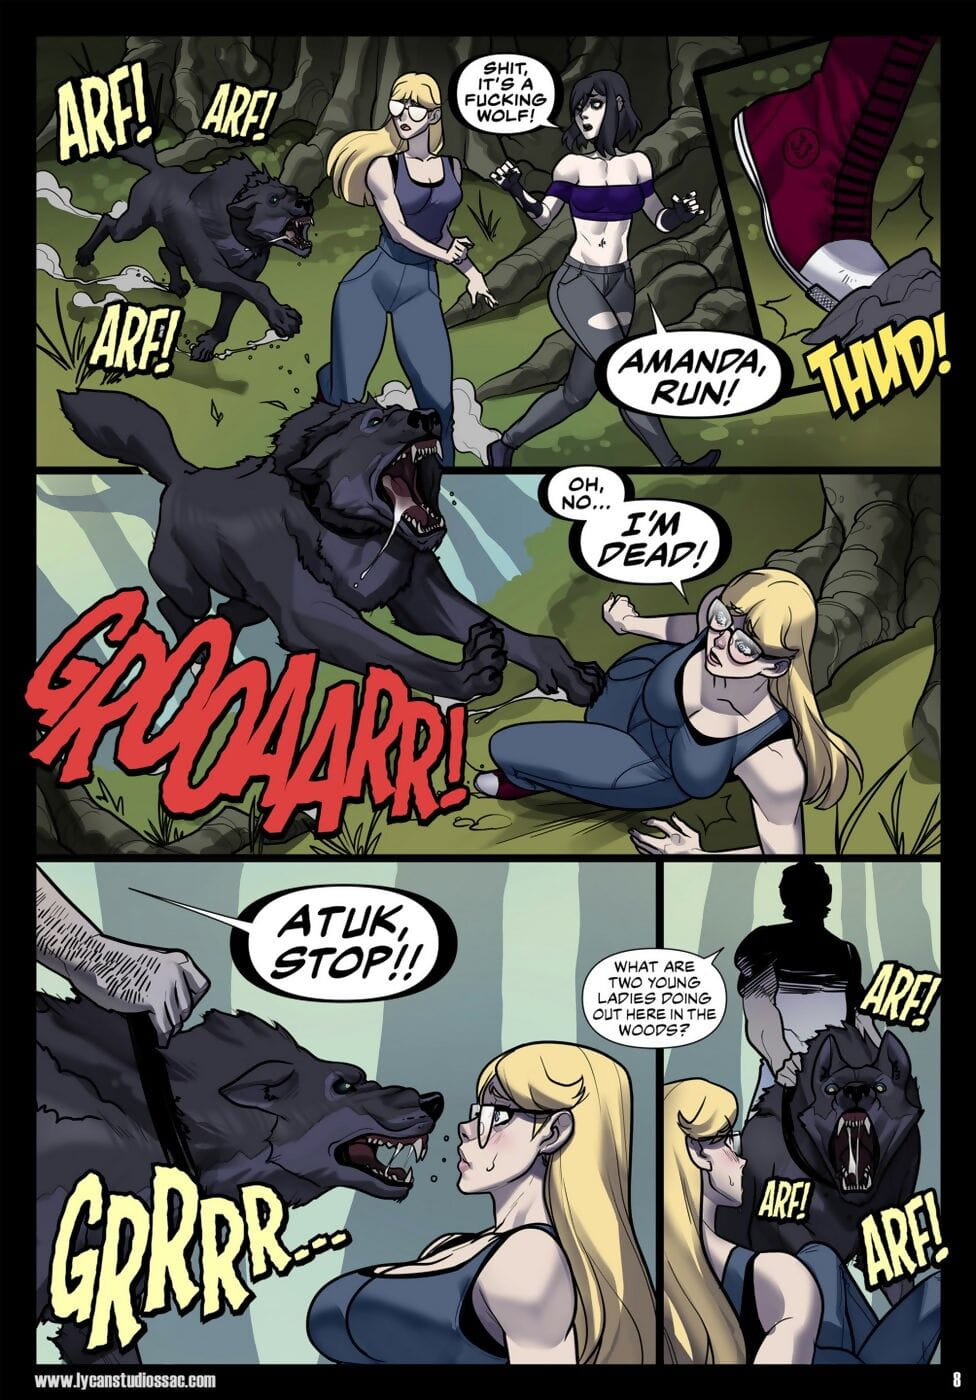 locofuria – Werwolf Fan page 1